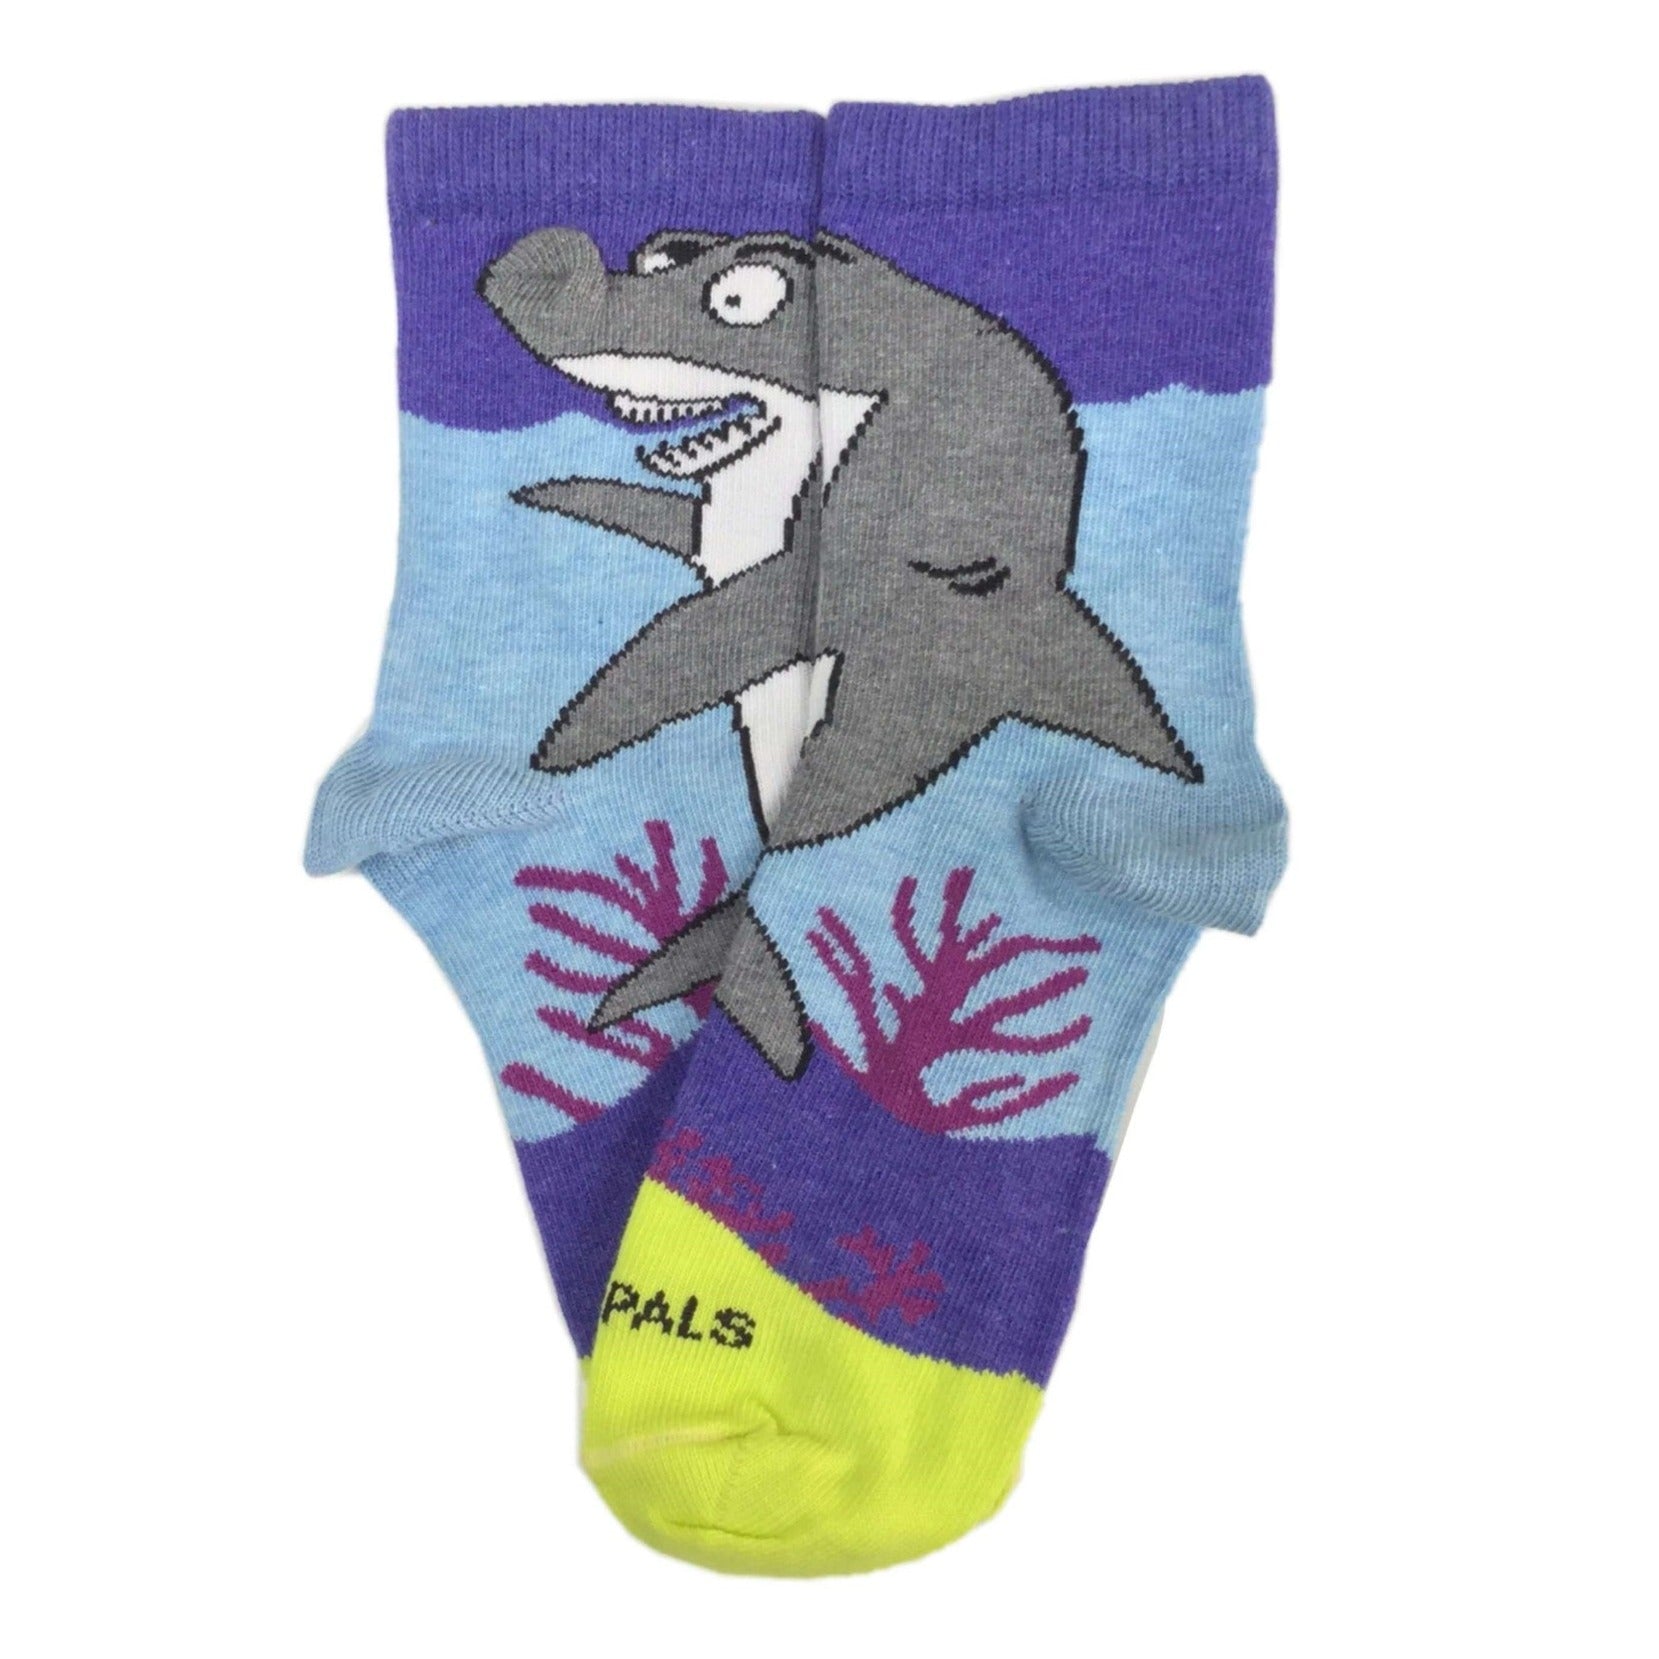 Bob the Shark Socks (Ages 3-7) from the Sock Panda